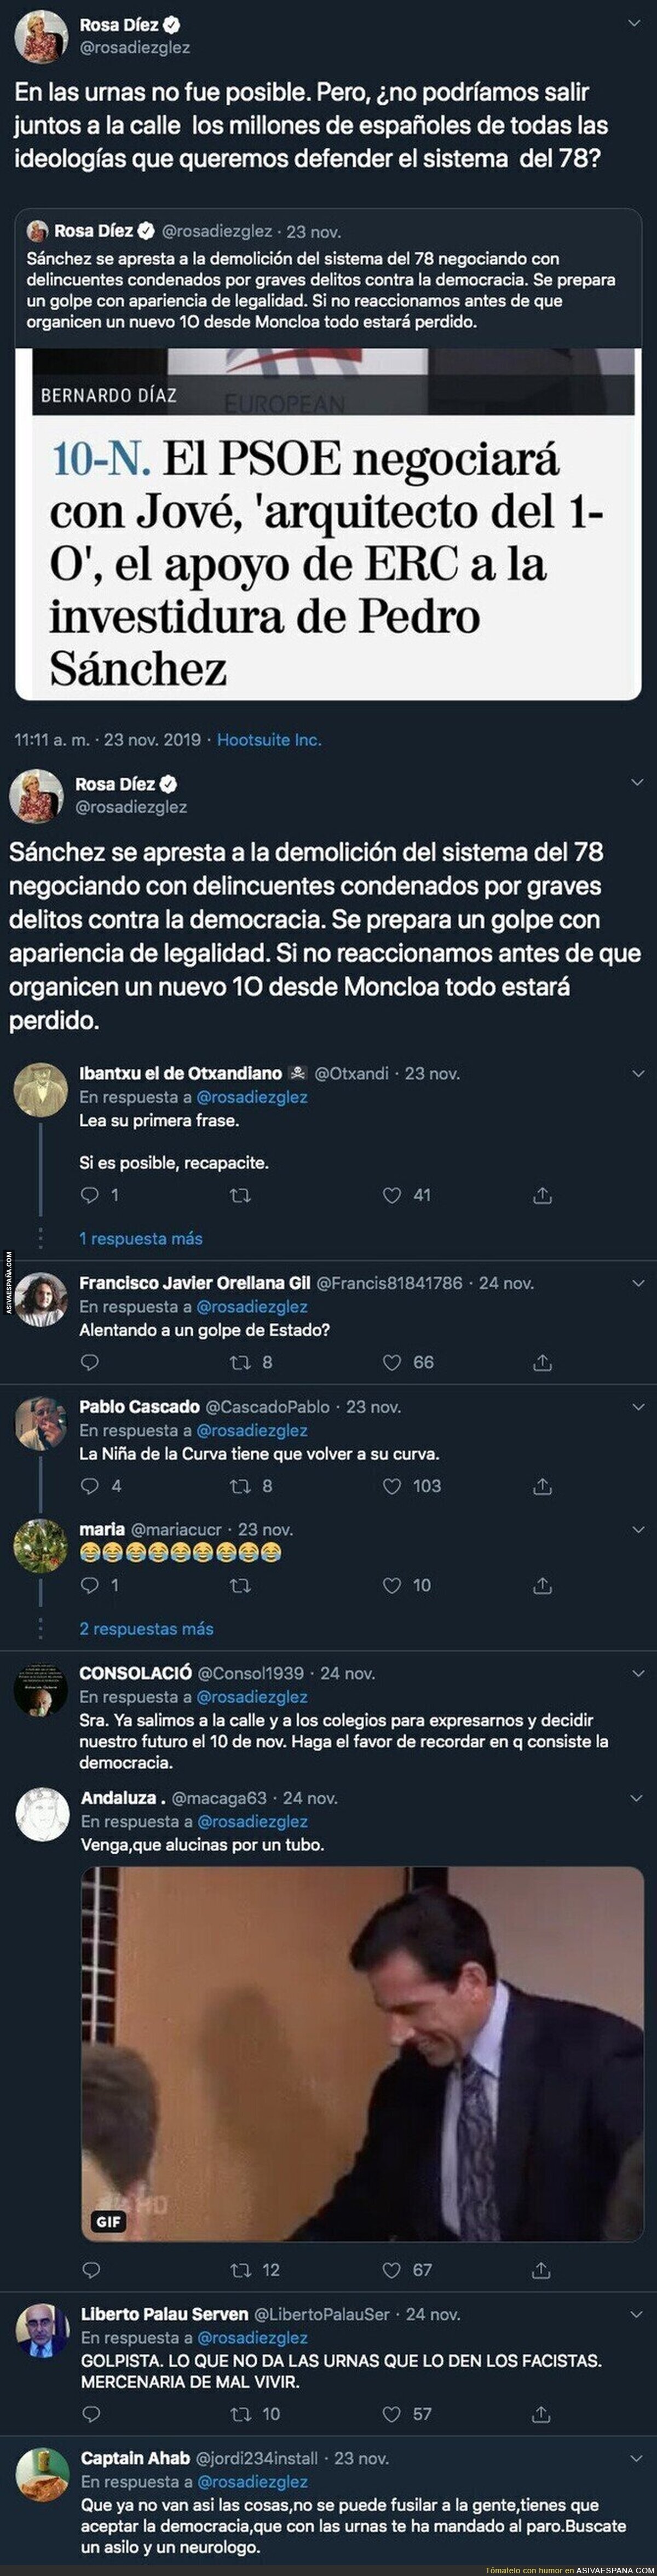 ¿Está Rosa Díez insinuando un Golpe de Estado en España contra Pedro Sánchez?